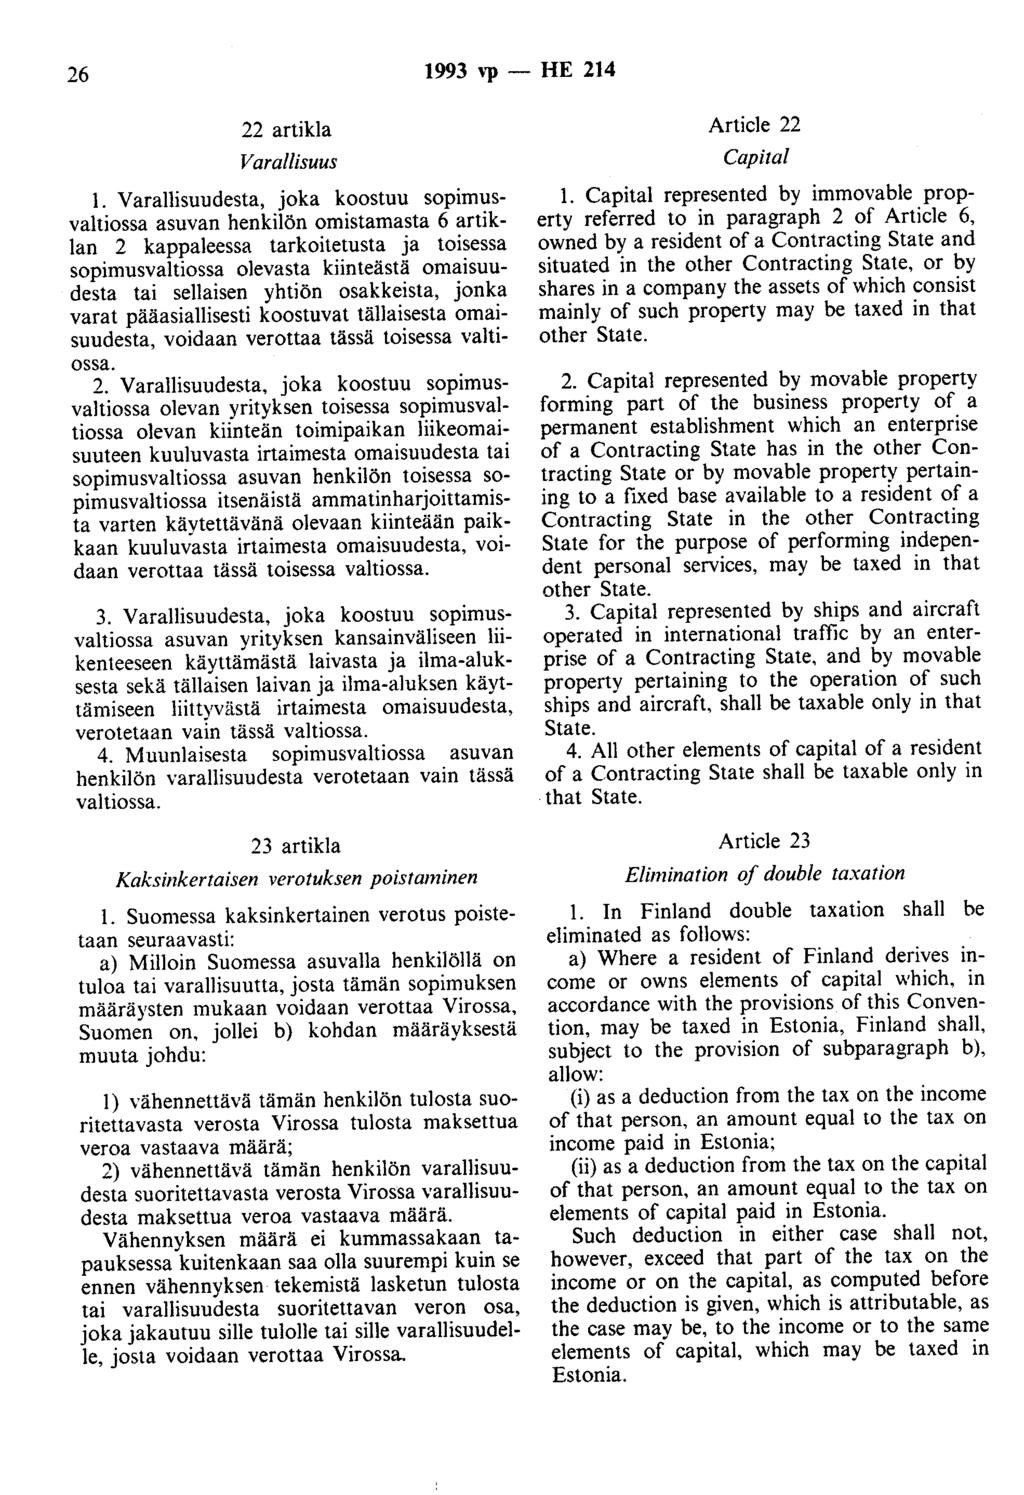 26 1993 vp - HE 214 22 artikla Varallisuus 1.